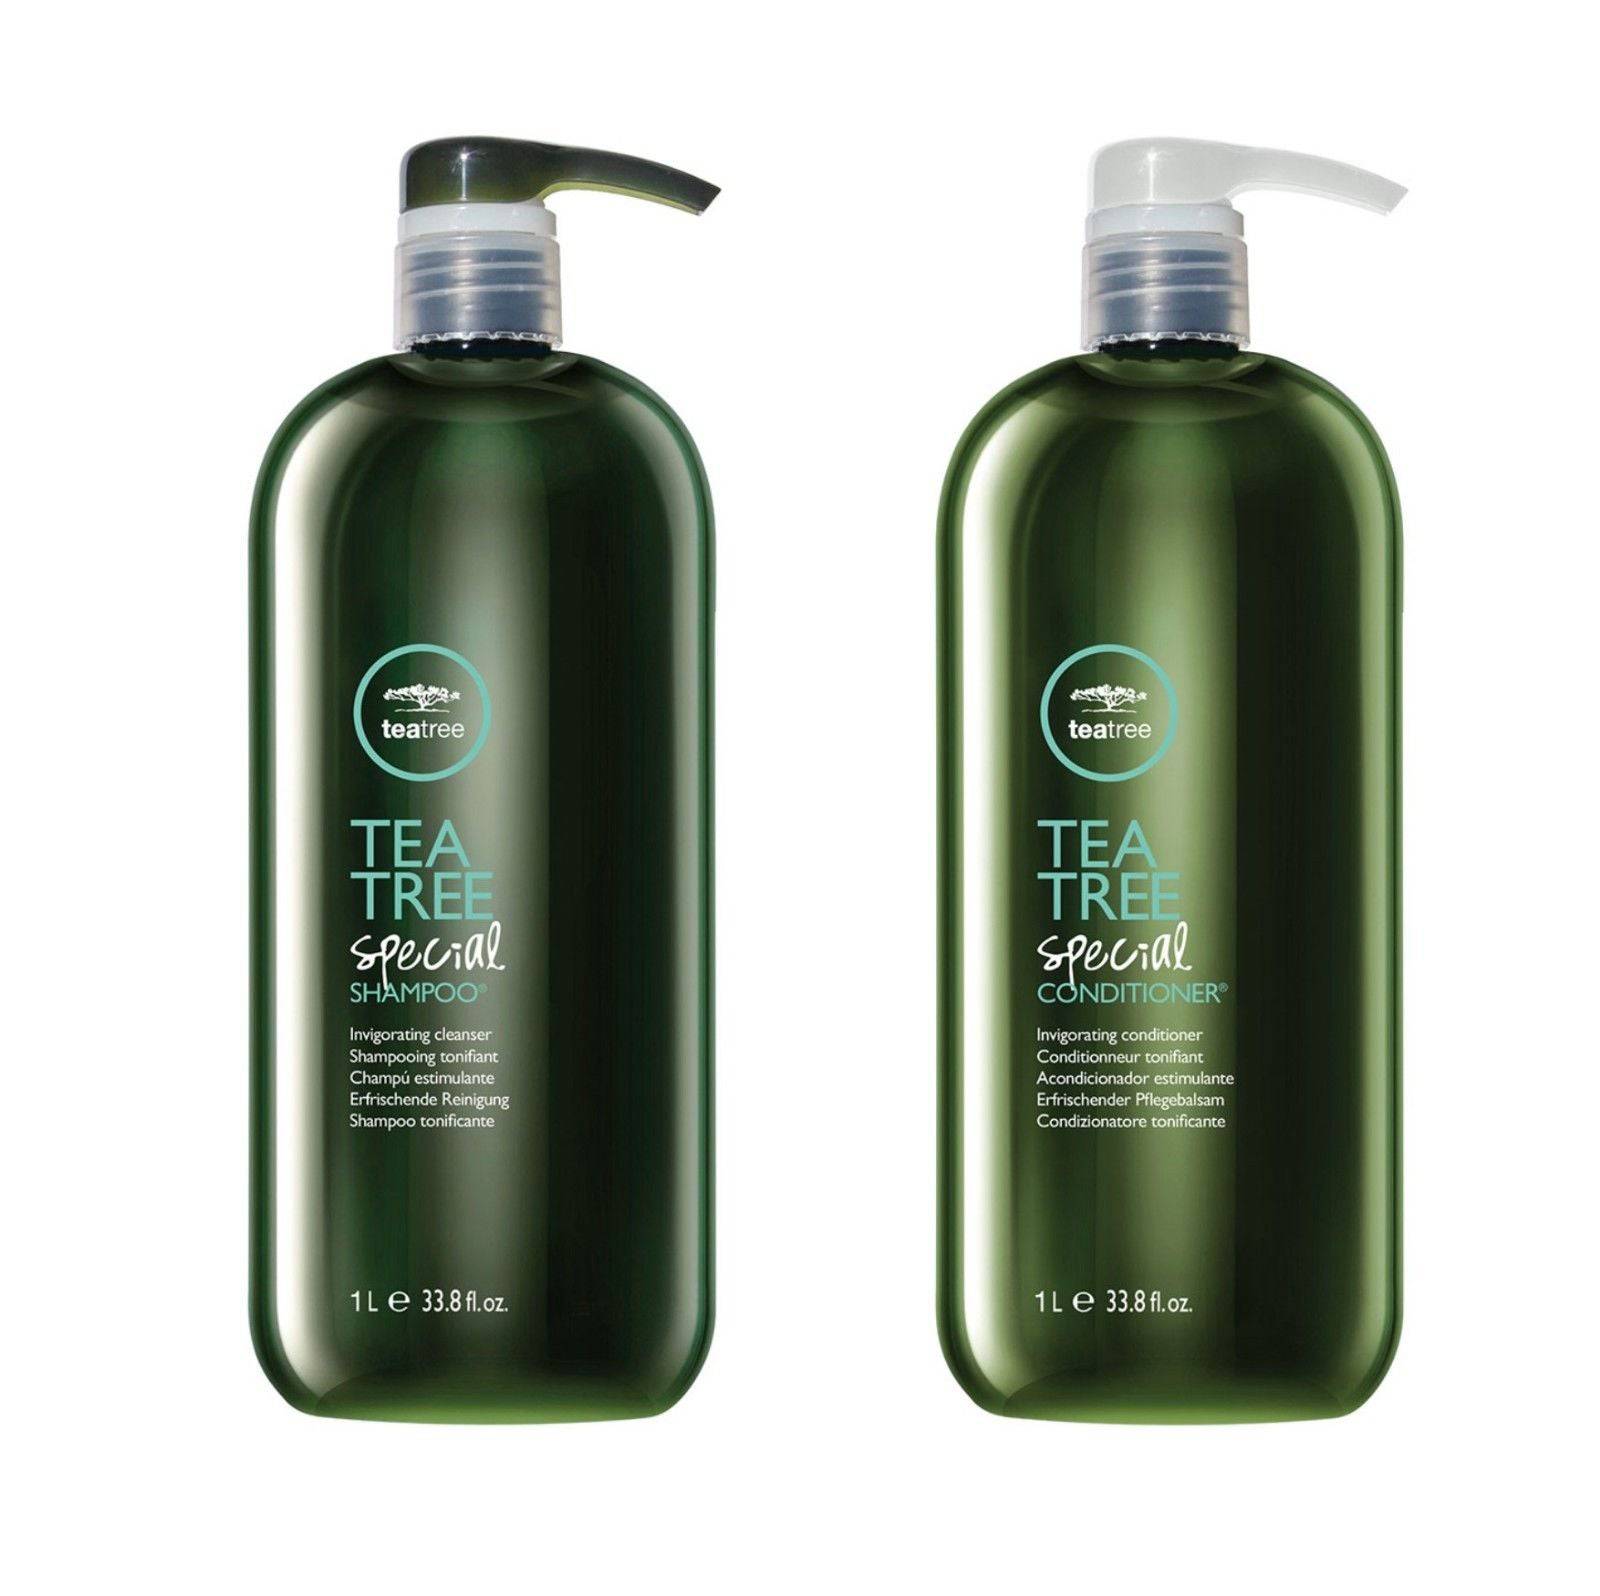 Paul Mitchell Tea Tree Special Invigorating Shampoo Conditioner 1lt each - On Line Hair Depot